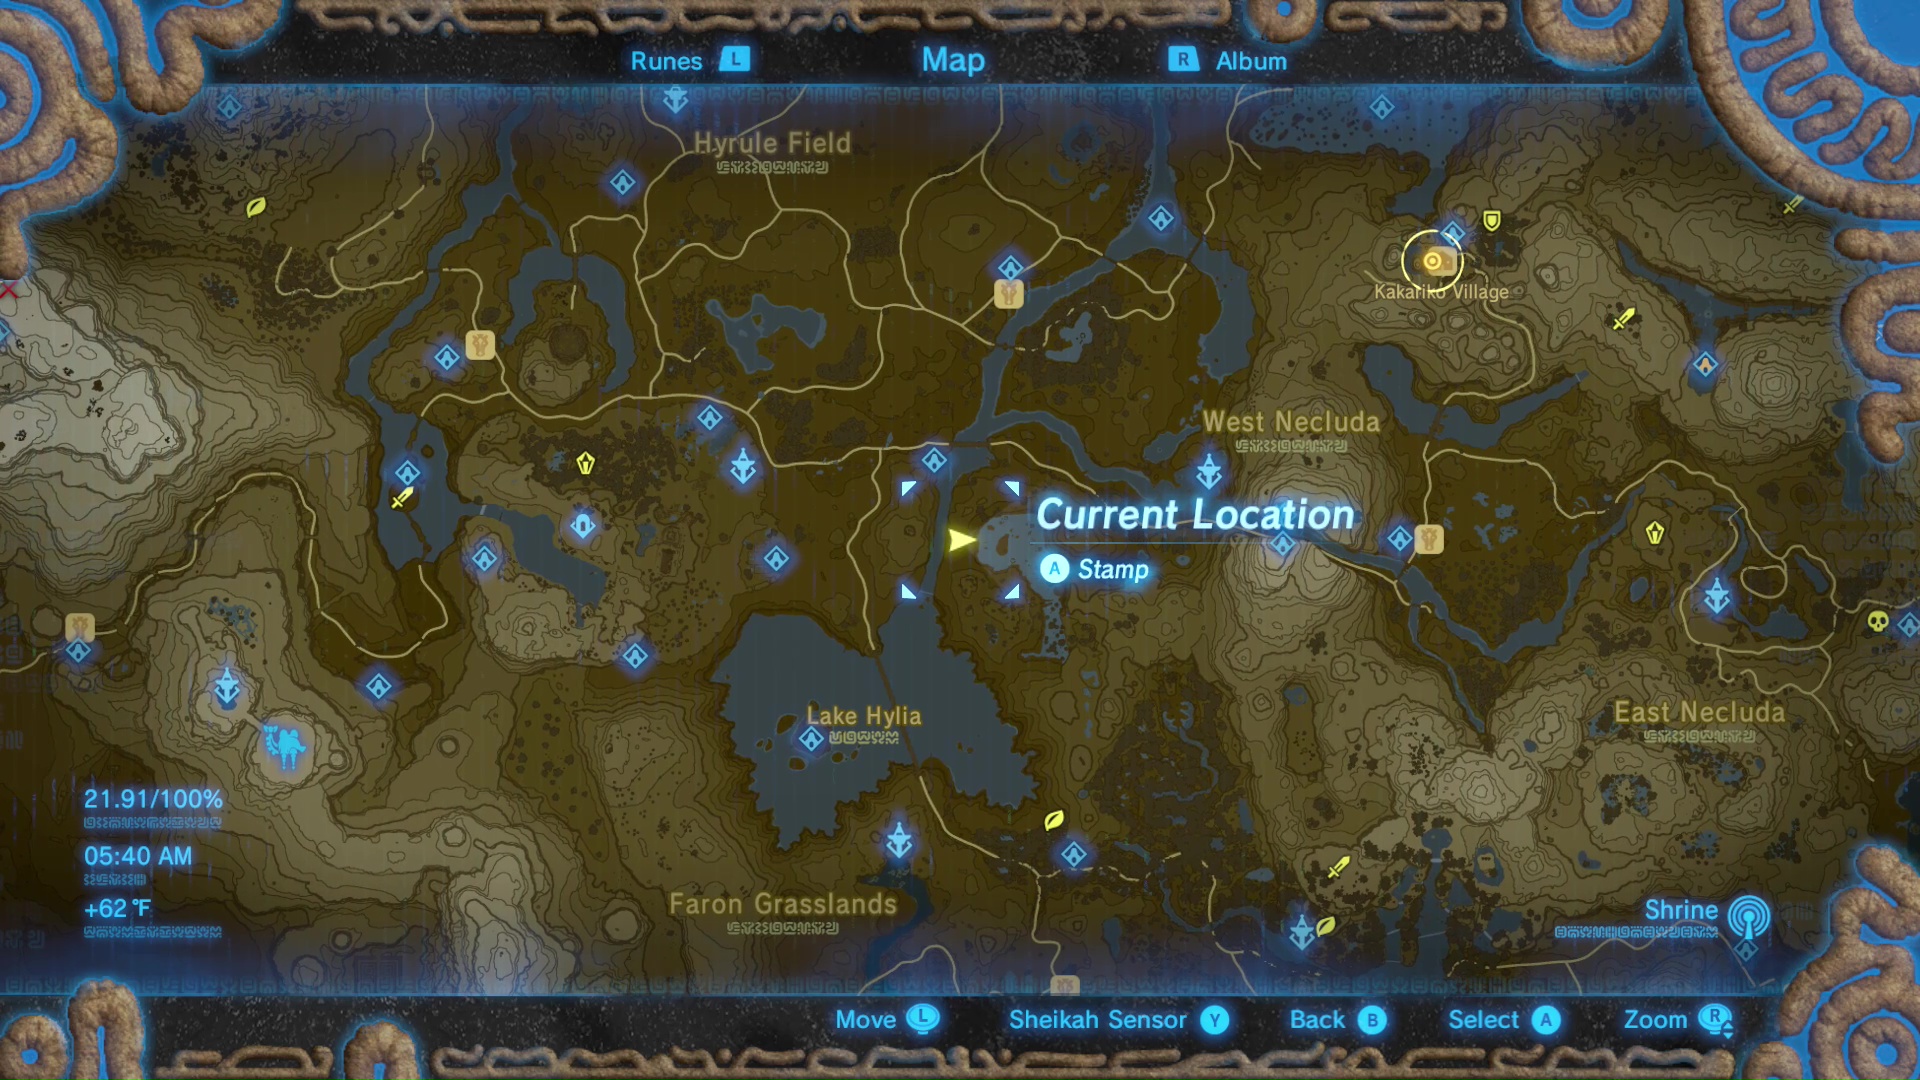 Captured Memories - Dueling Peaks Region - Side Quests, The Legend of  Zelda: Breath of the Wild